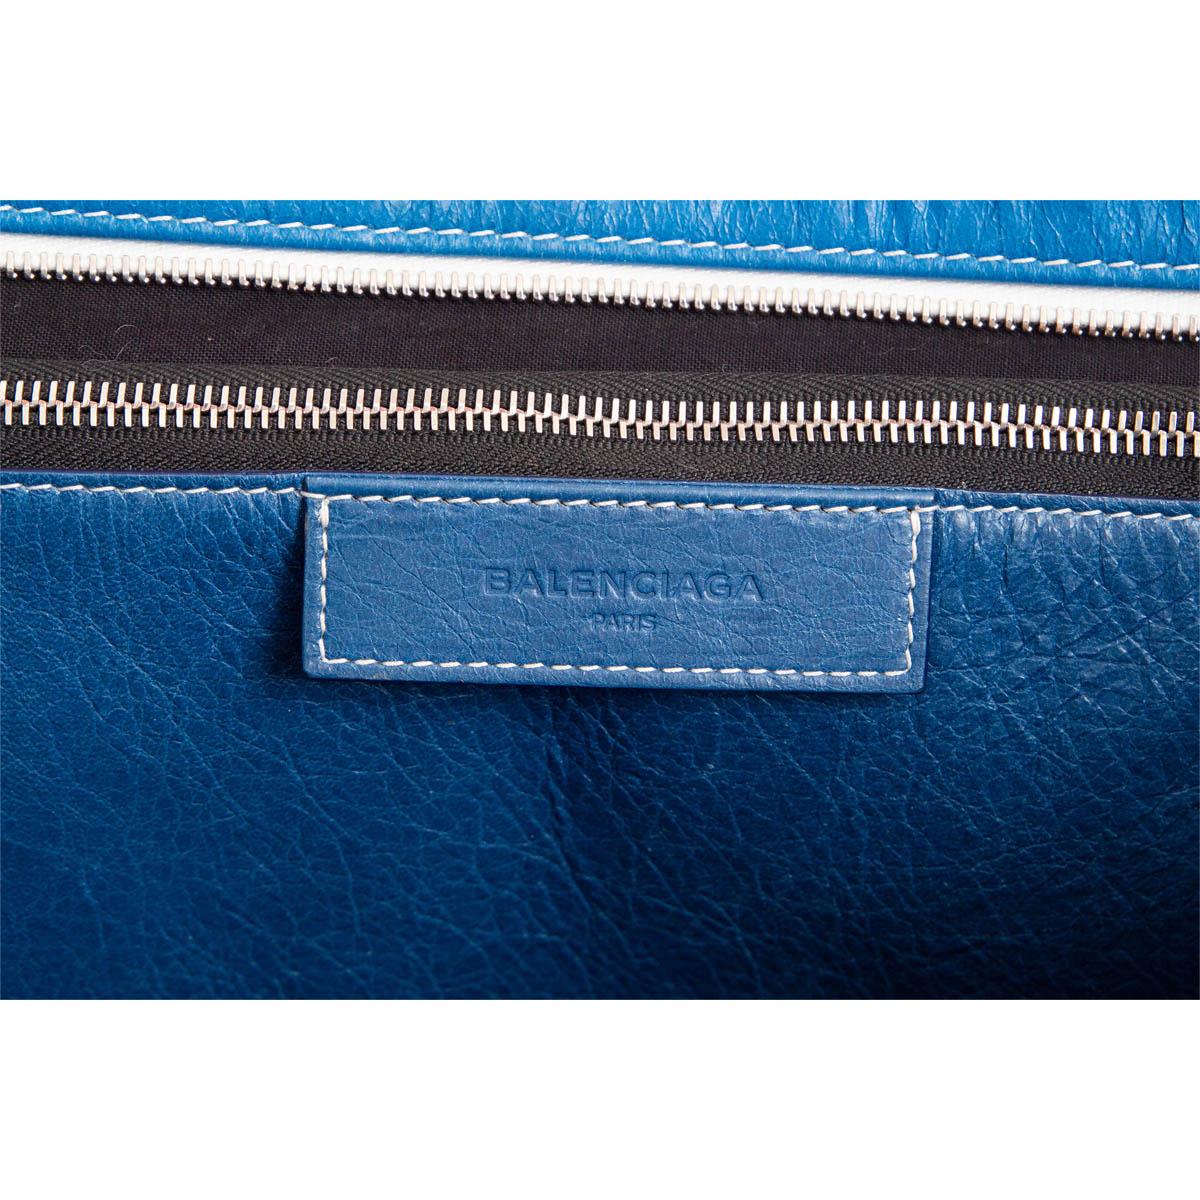 Blue BALENCIAGA blue green red leather 2017 STRIPED BAZAR LARGE SHOPPER Bag